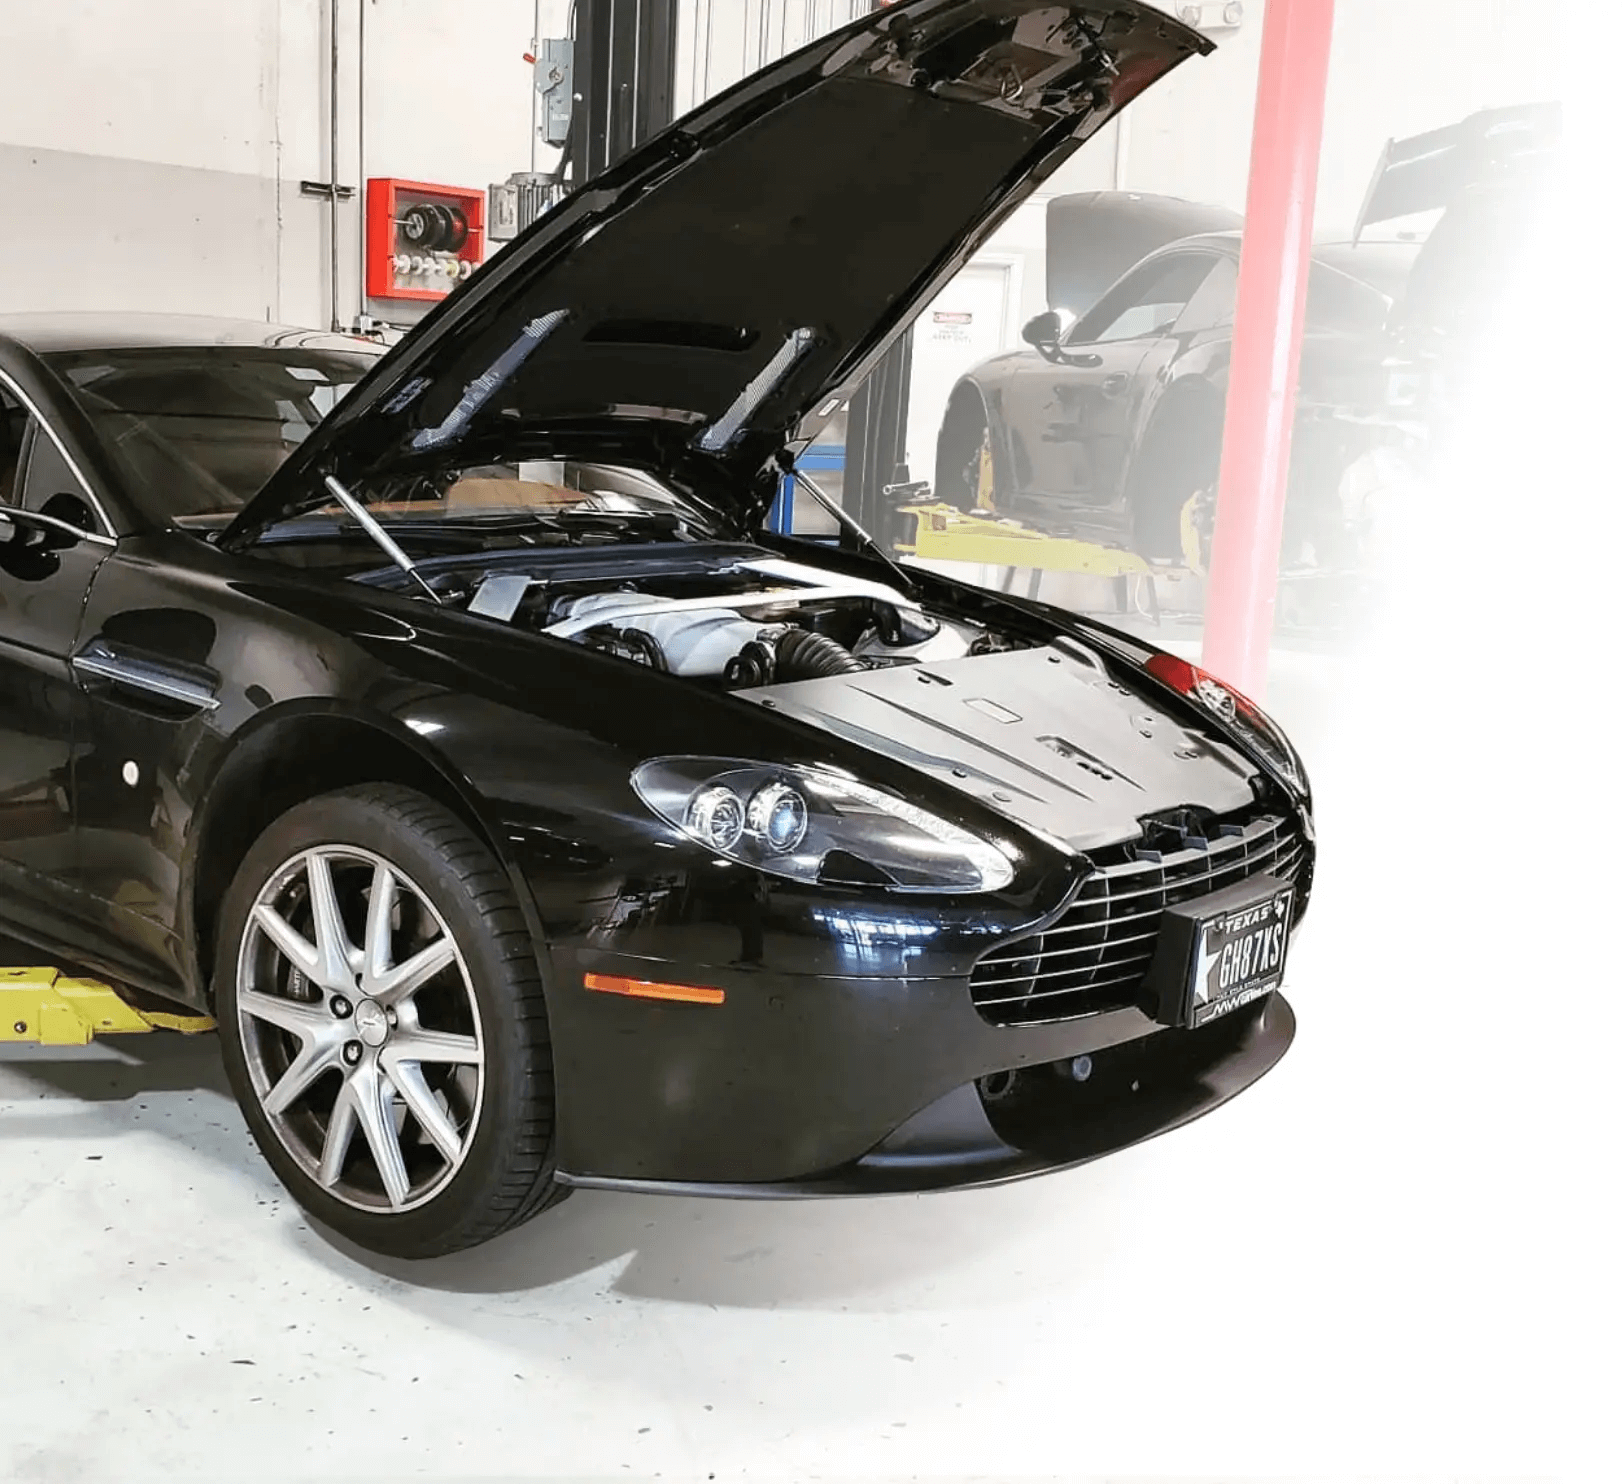 Aston Martin Vantage Car In Our Garage For Repair